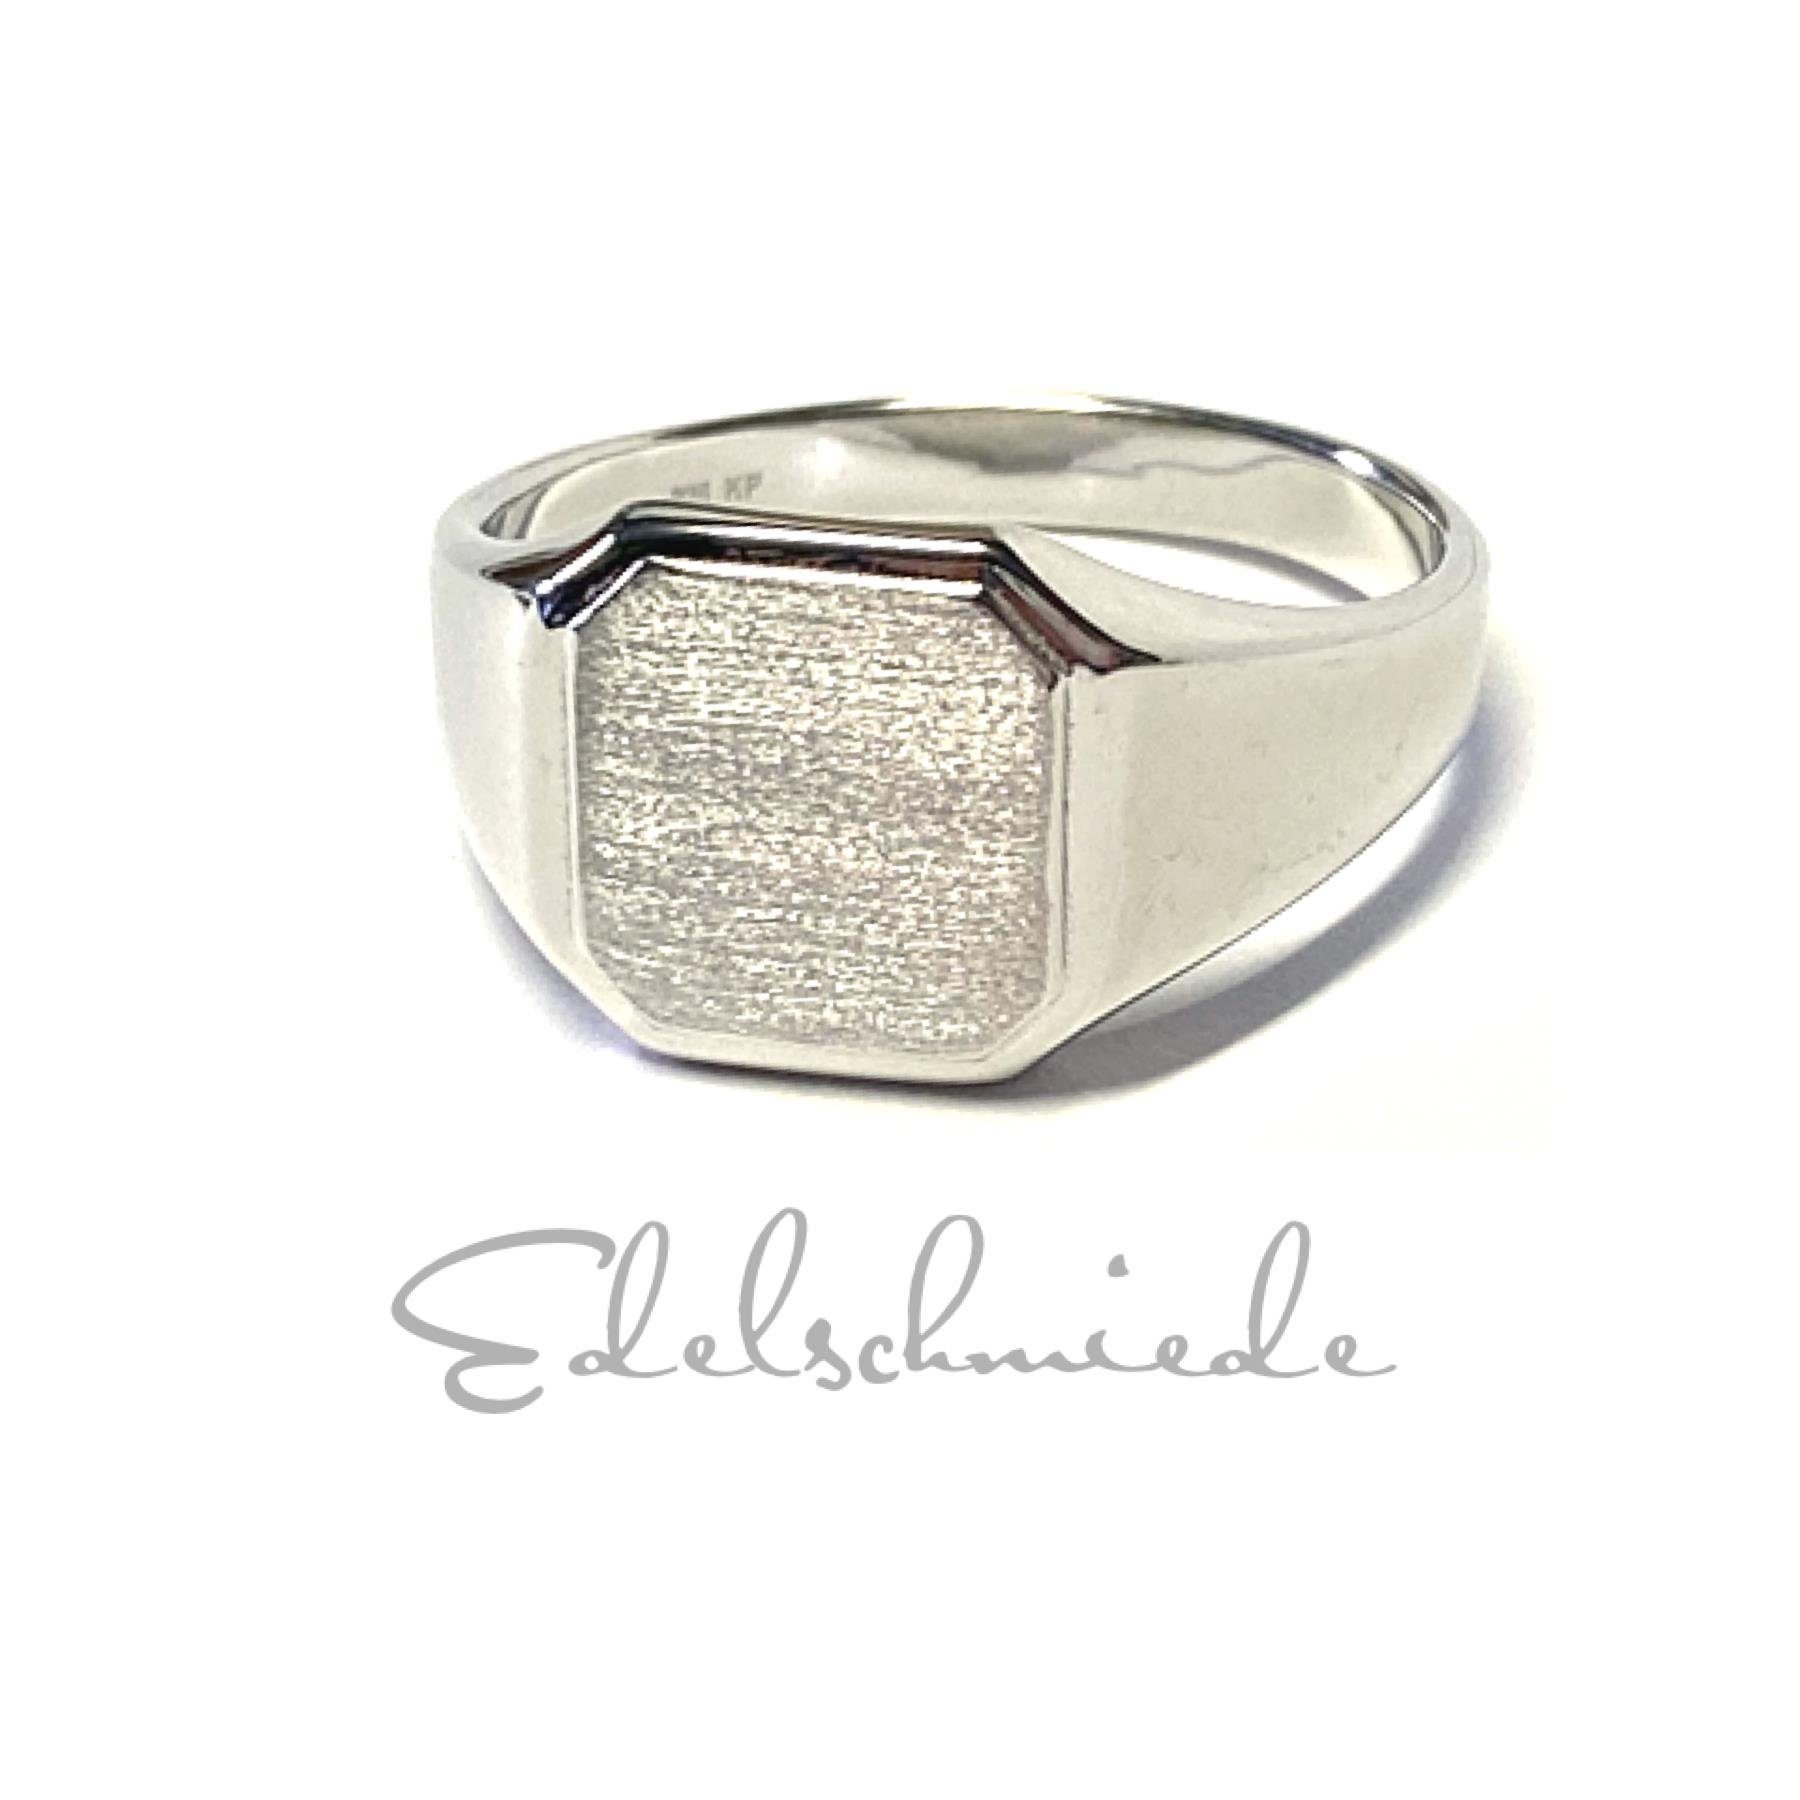 Edelschmiede925 Silberring Ring 925 Silber rhodiniert teilweise matt  Herrenring Siegelring #72